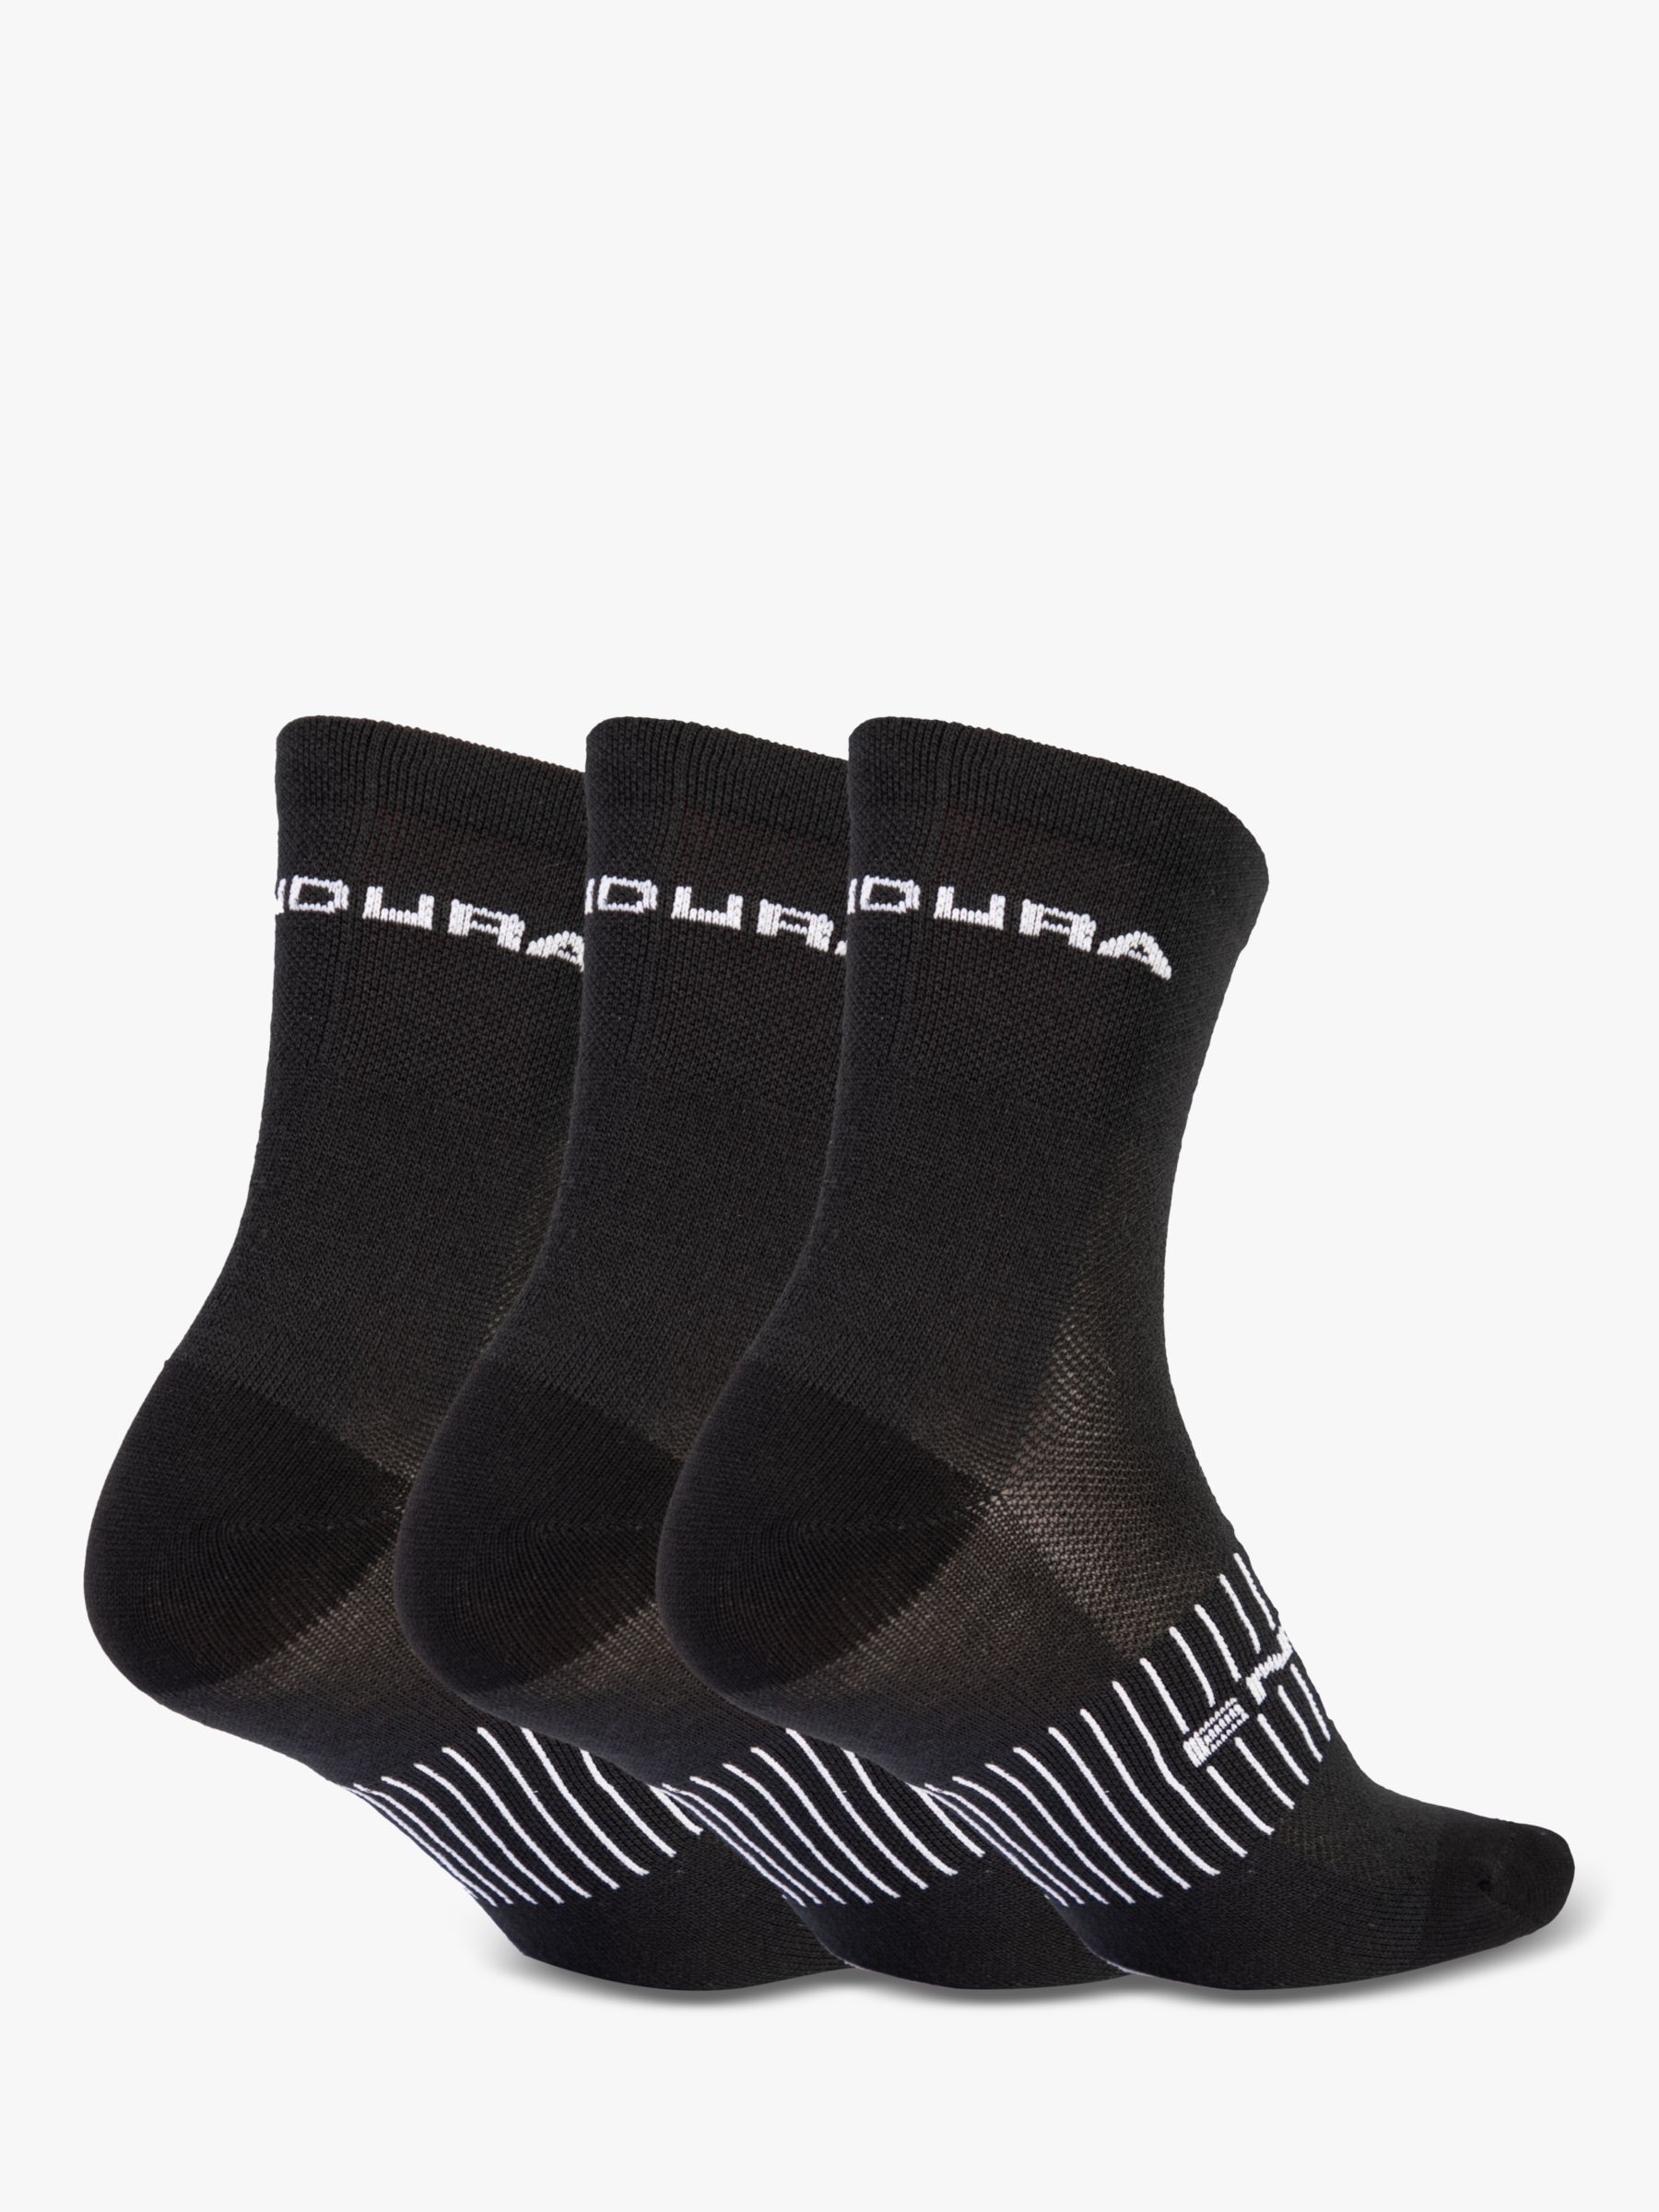 Buy Endura Men's Coolmax Race Socks Online at johnlewis.com